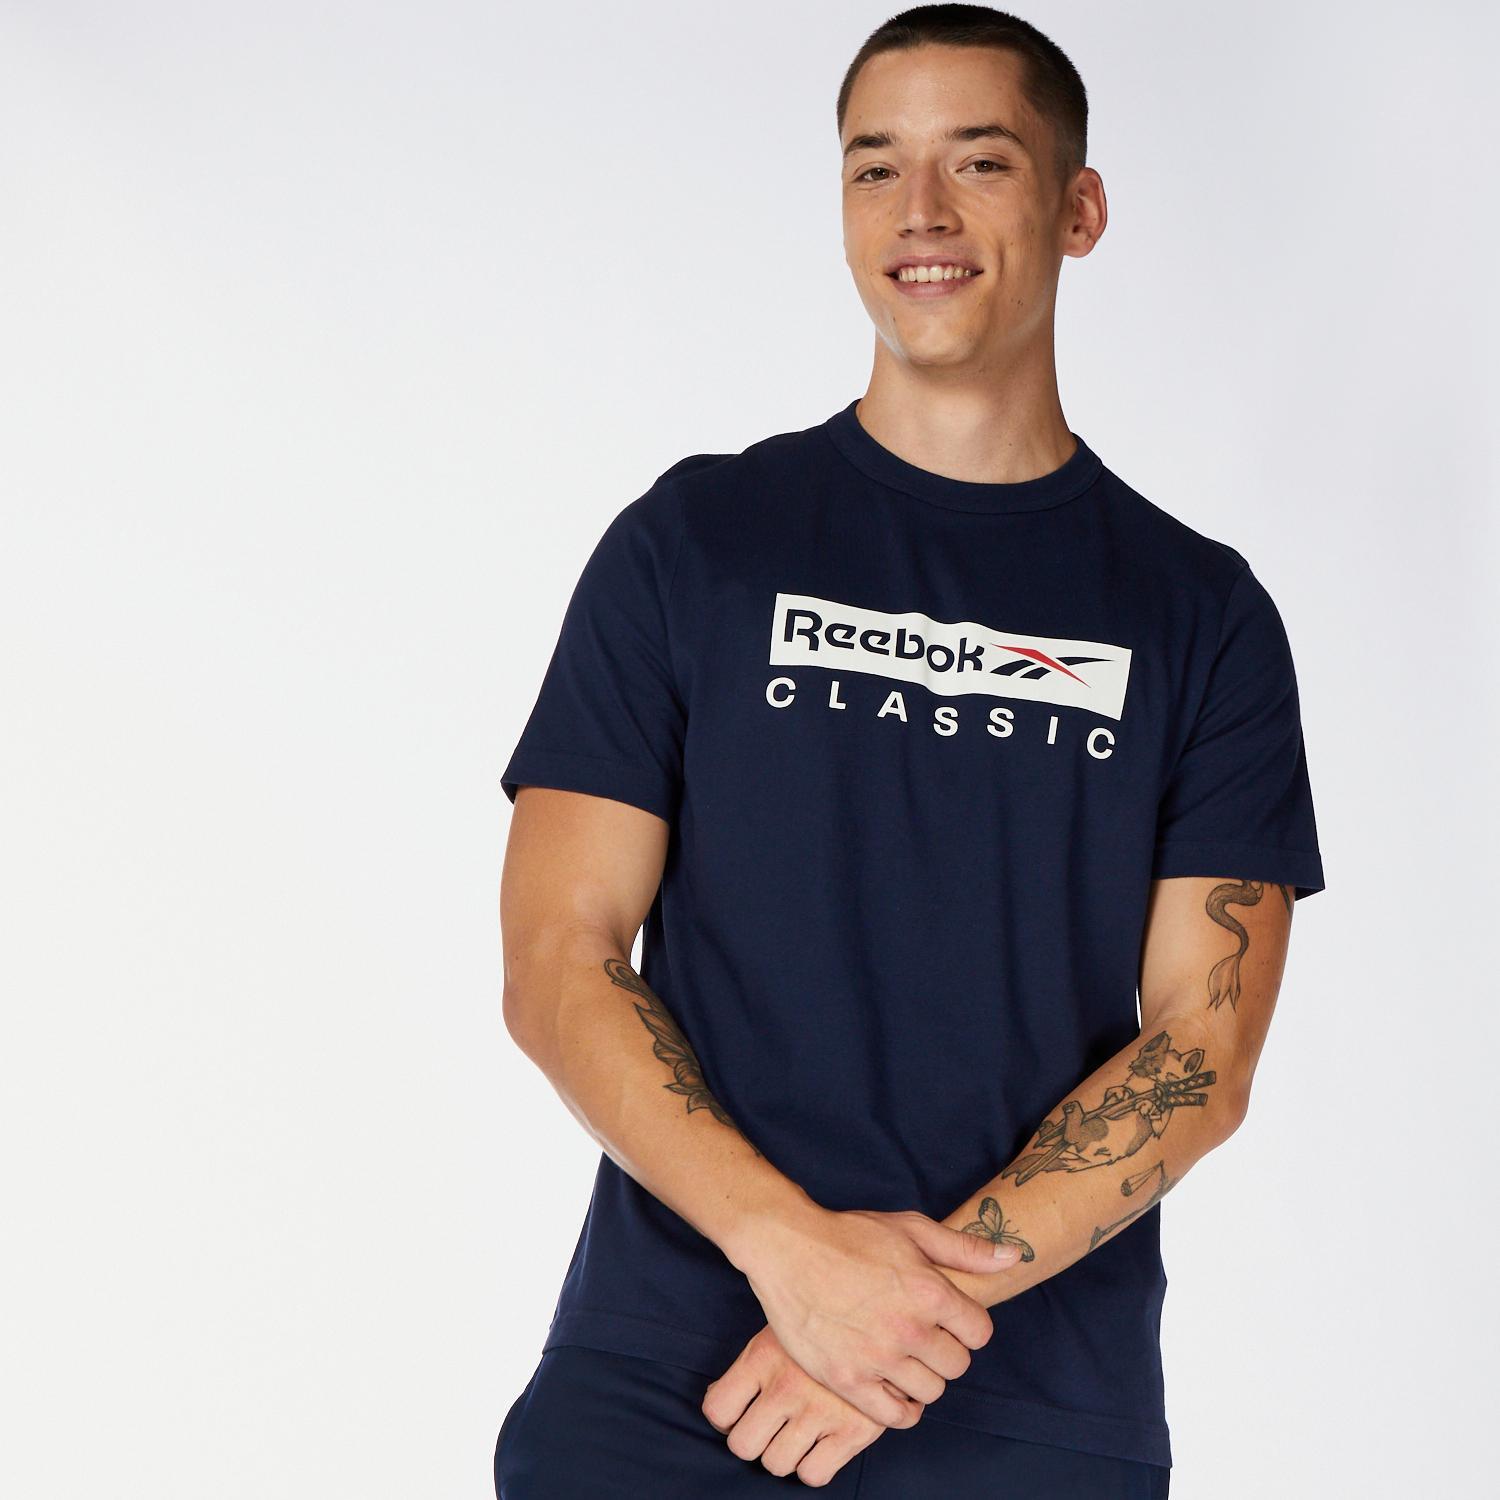 Camiseta Reebok - Marino - Camiseta Hombre